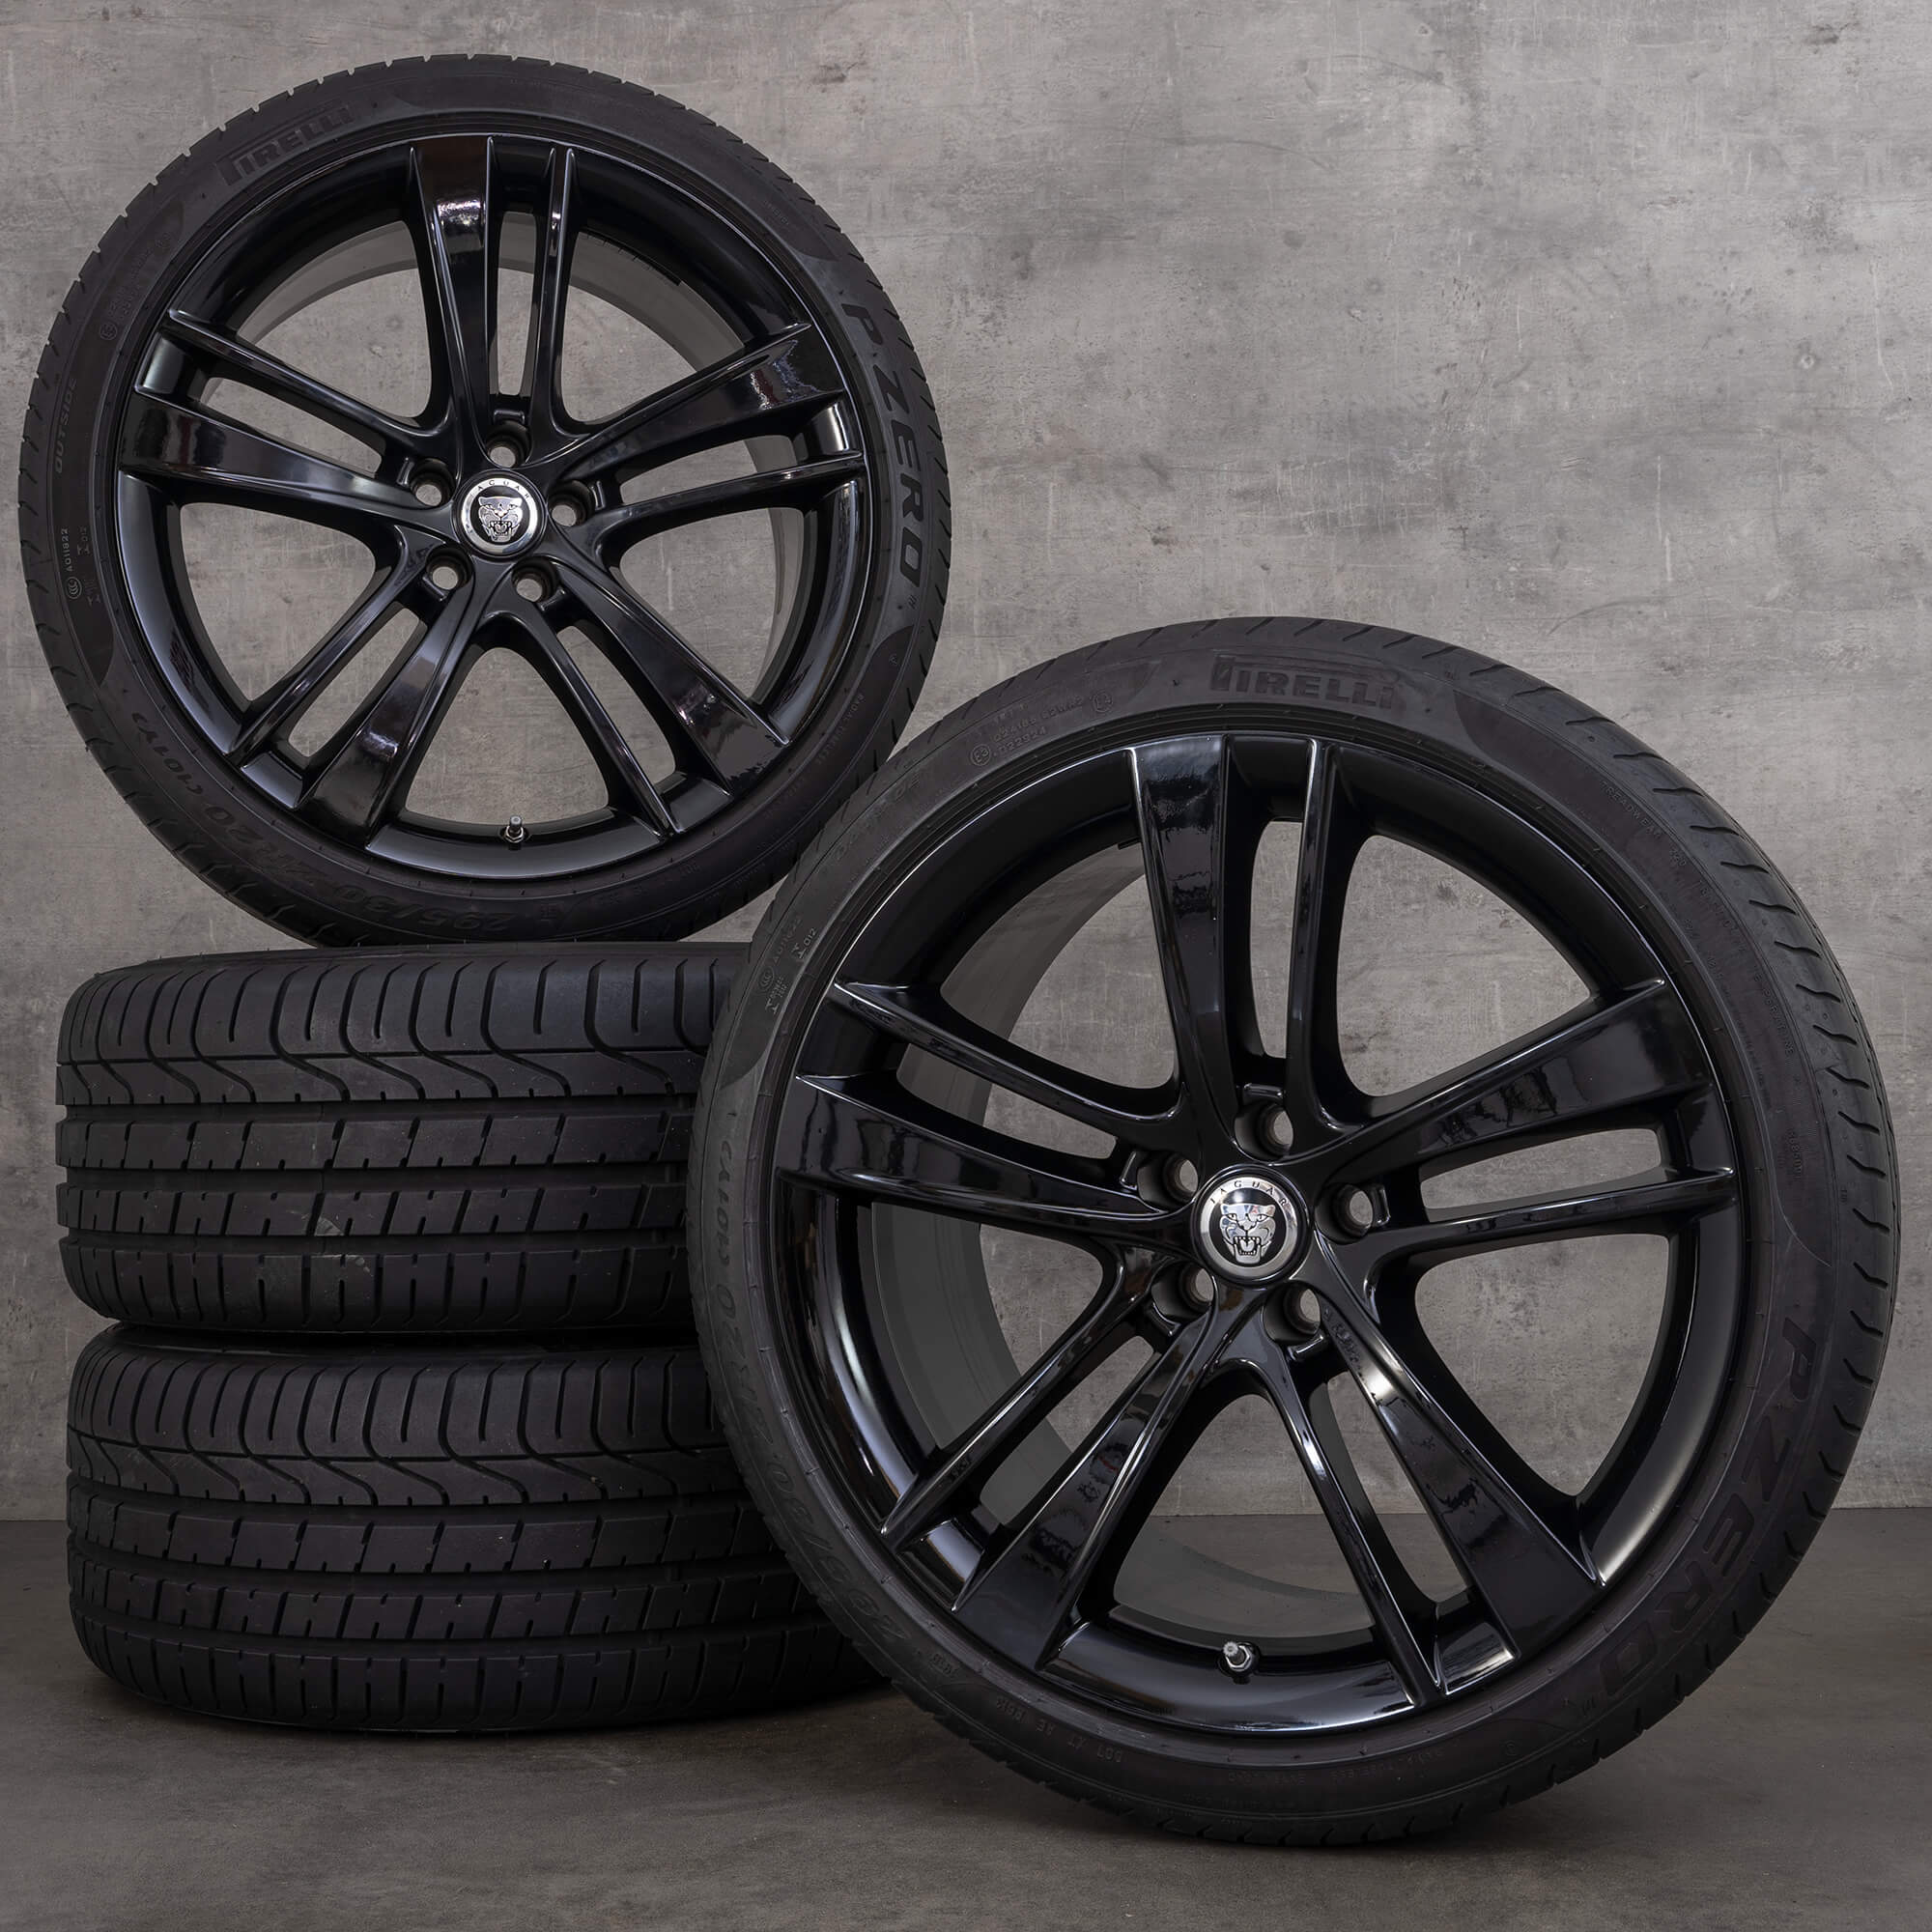 Jaguar F-Type summer wheels 20 inch rims tires alloy rims